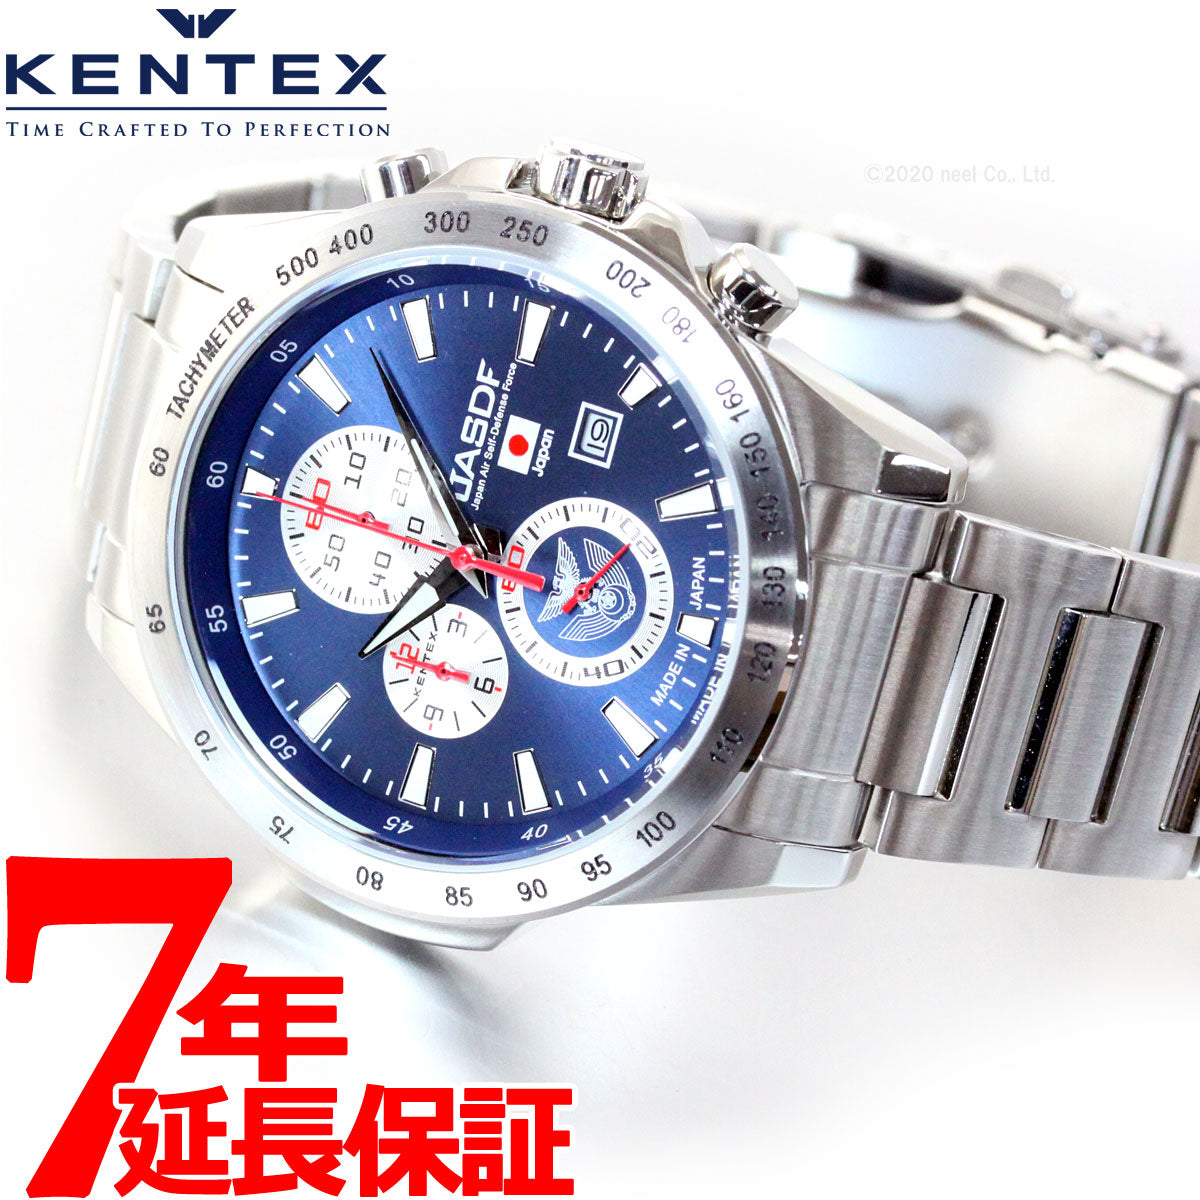 KENTEX ケンテックス 腕時計 メンズ JASDF PRO 自衛隊モデル 航空